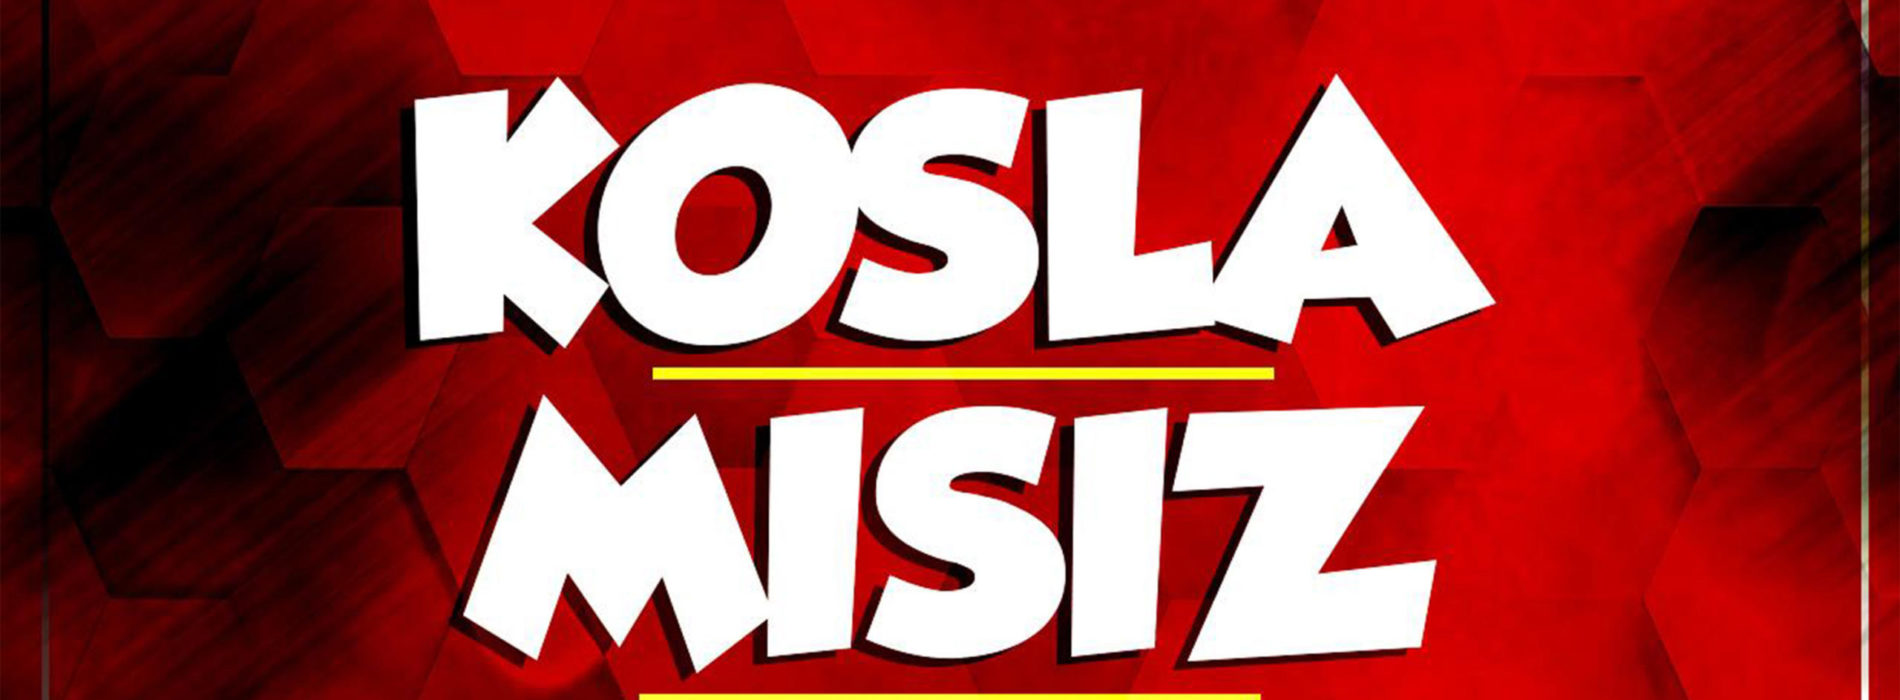 Kosla & Misiz : « On s’abime » – Avril 2020 – Exclusivité